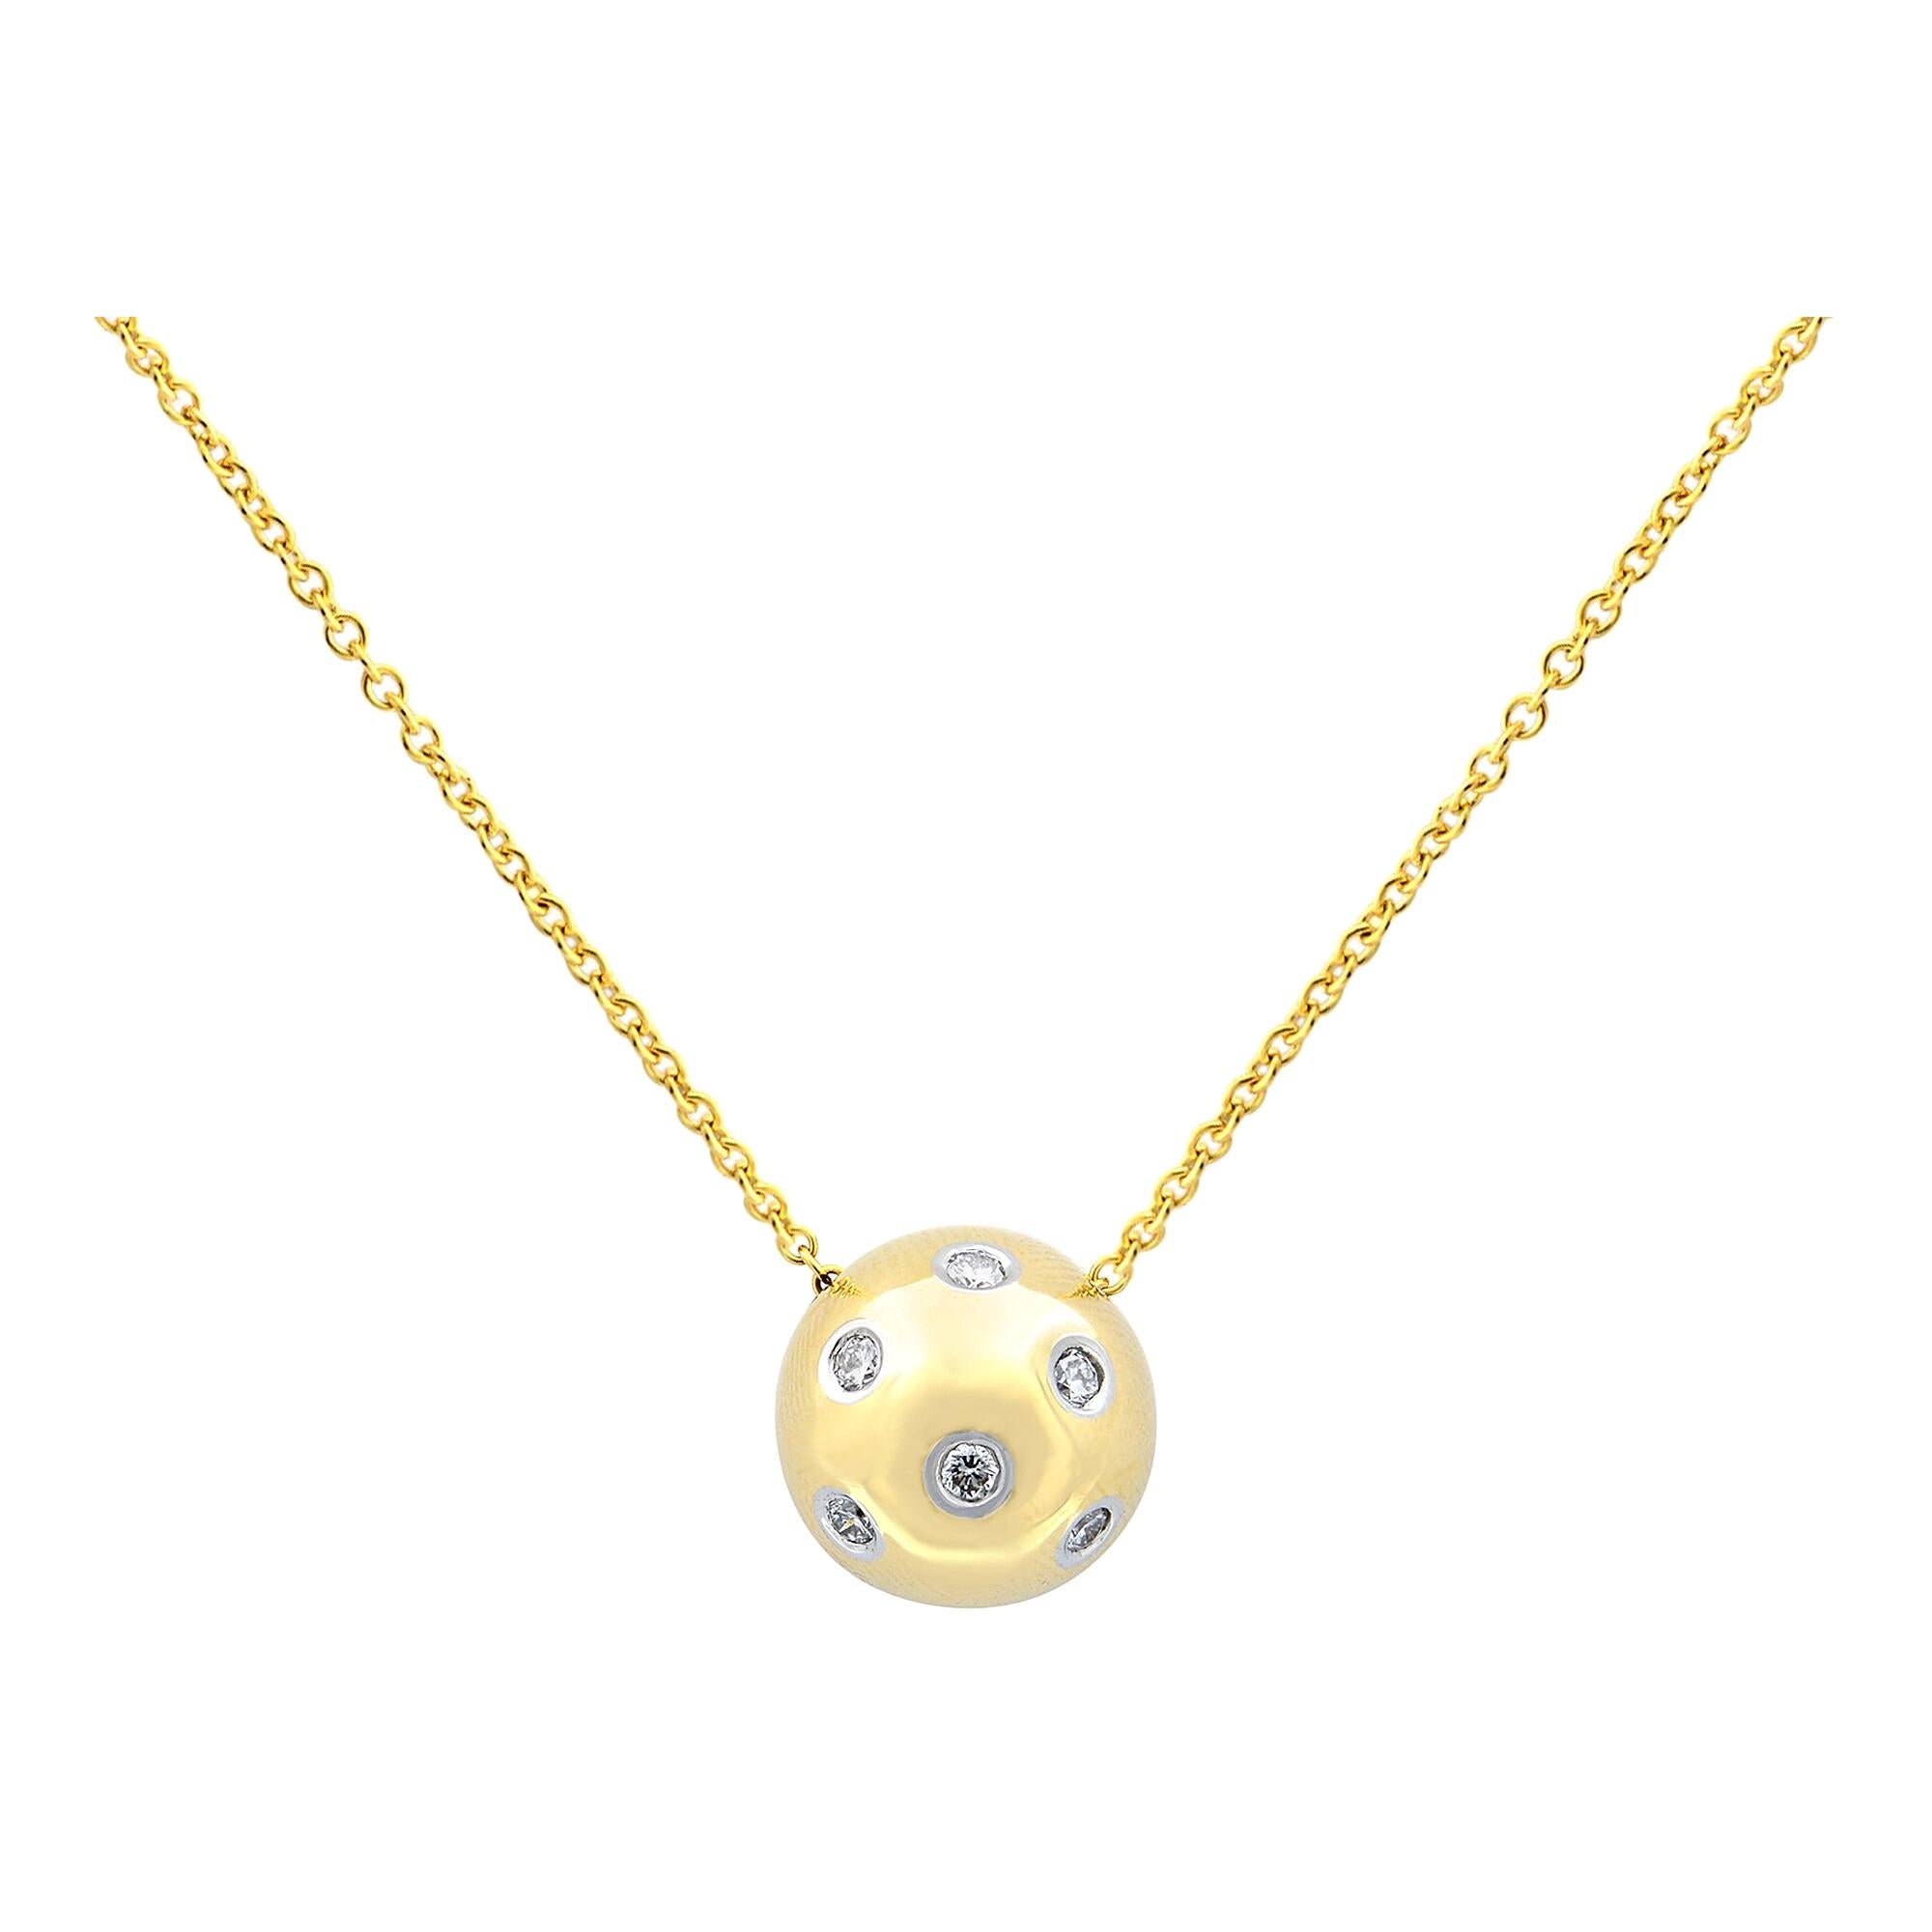 Tiffany & Co. 18K Diamond Emblem Lock Pendant Necklace - 18K Yellow Gold  Pendant Necklace, Necklaces - TIF103008